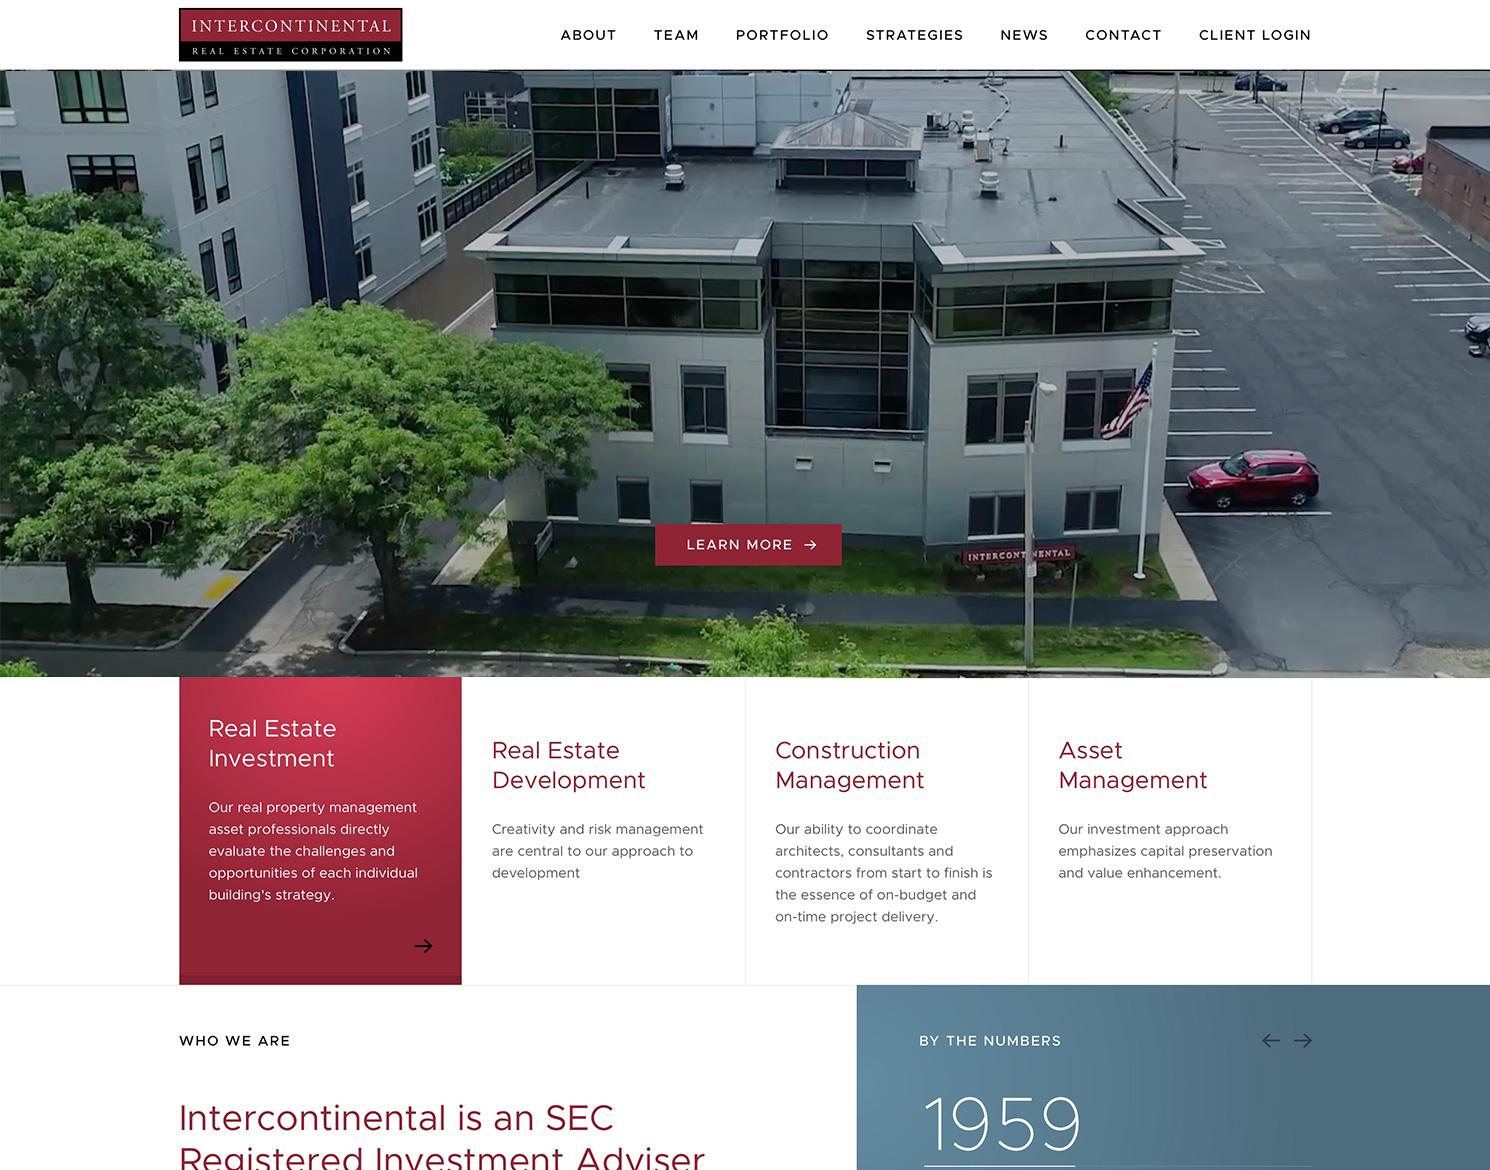 Intercontinental website design homepage showing marketing support